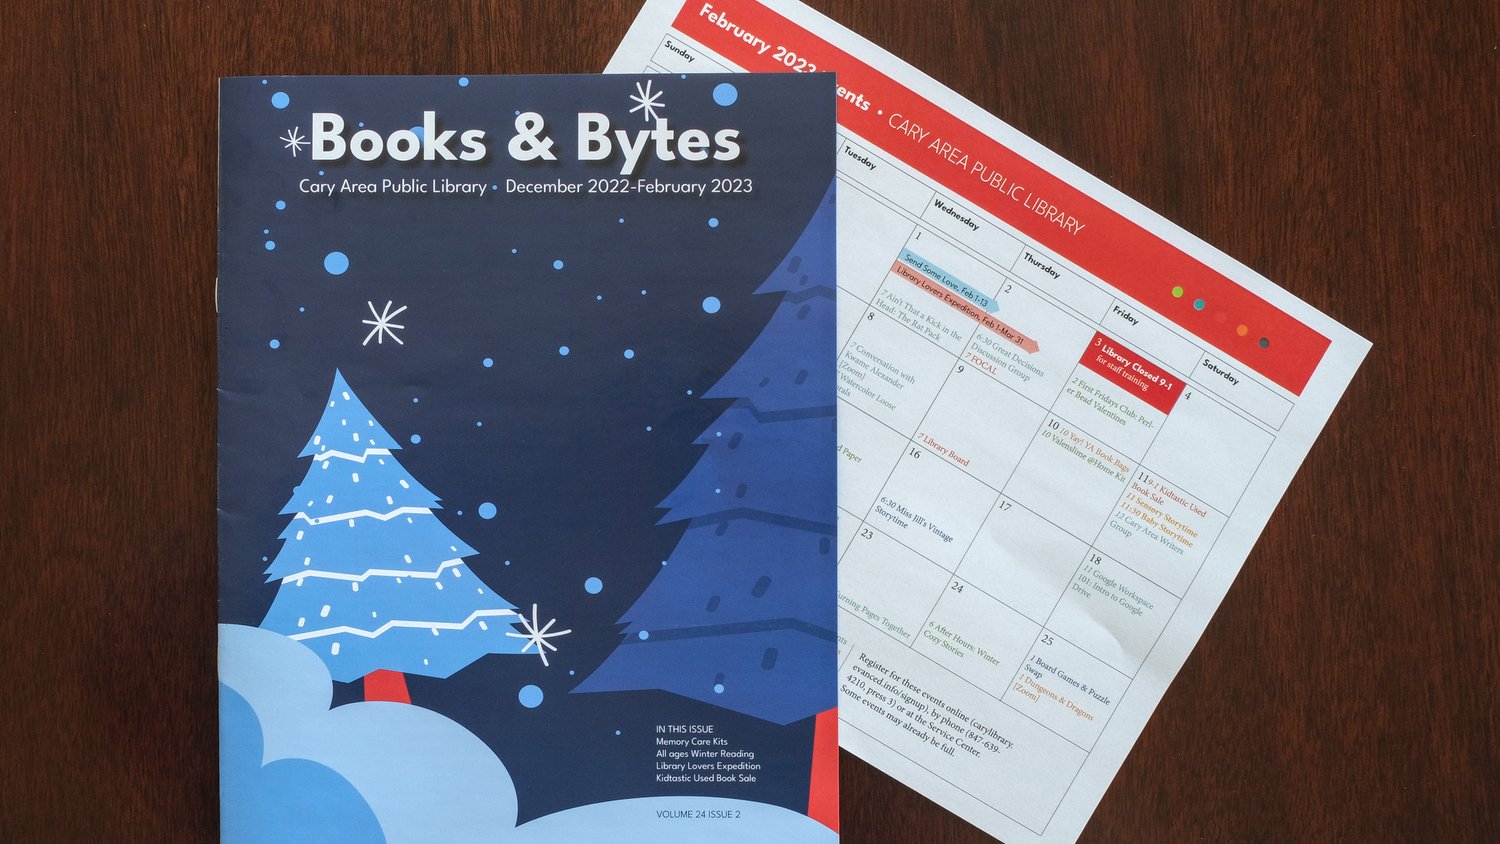 Books & Bytes program guide and monthly calendar.